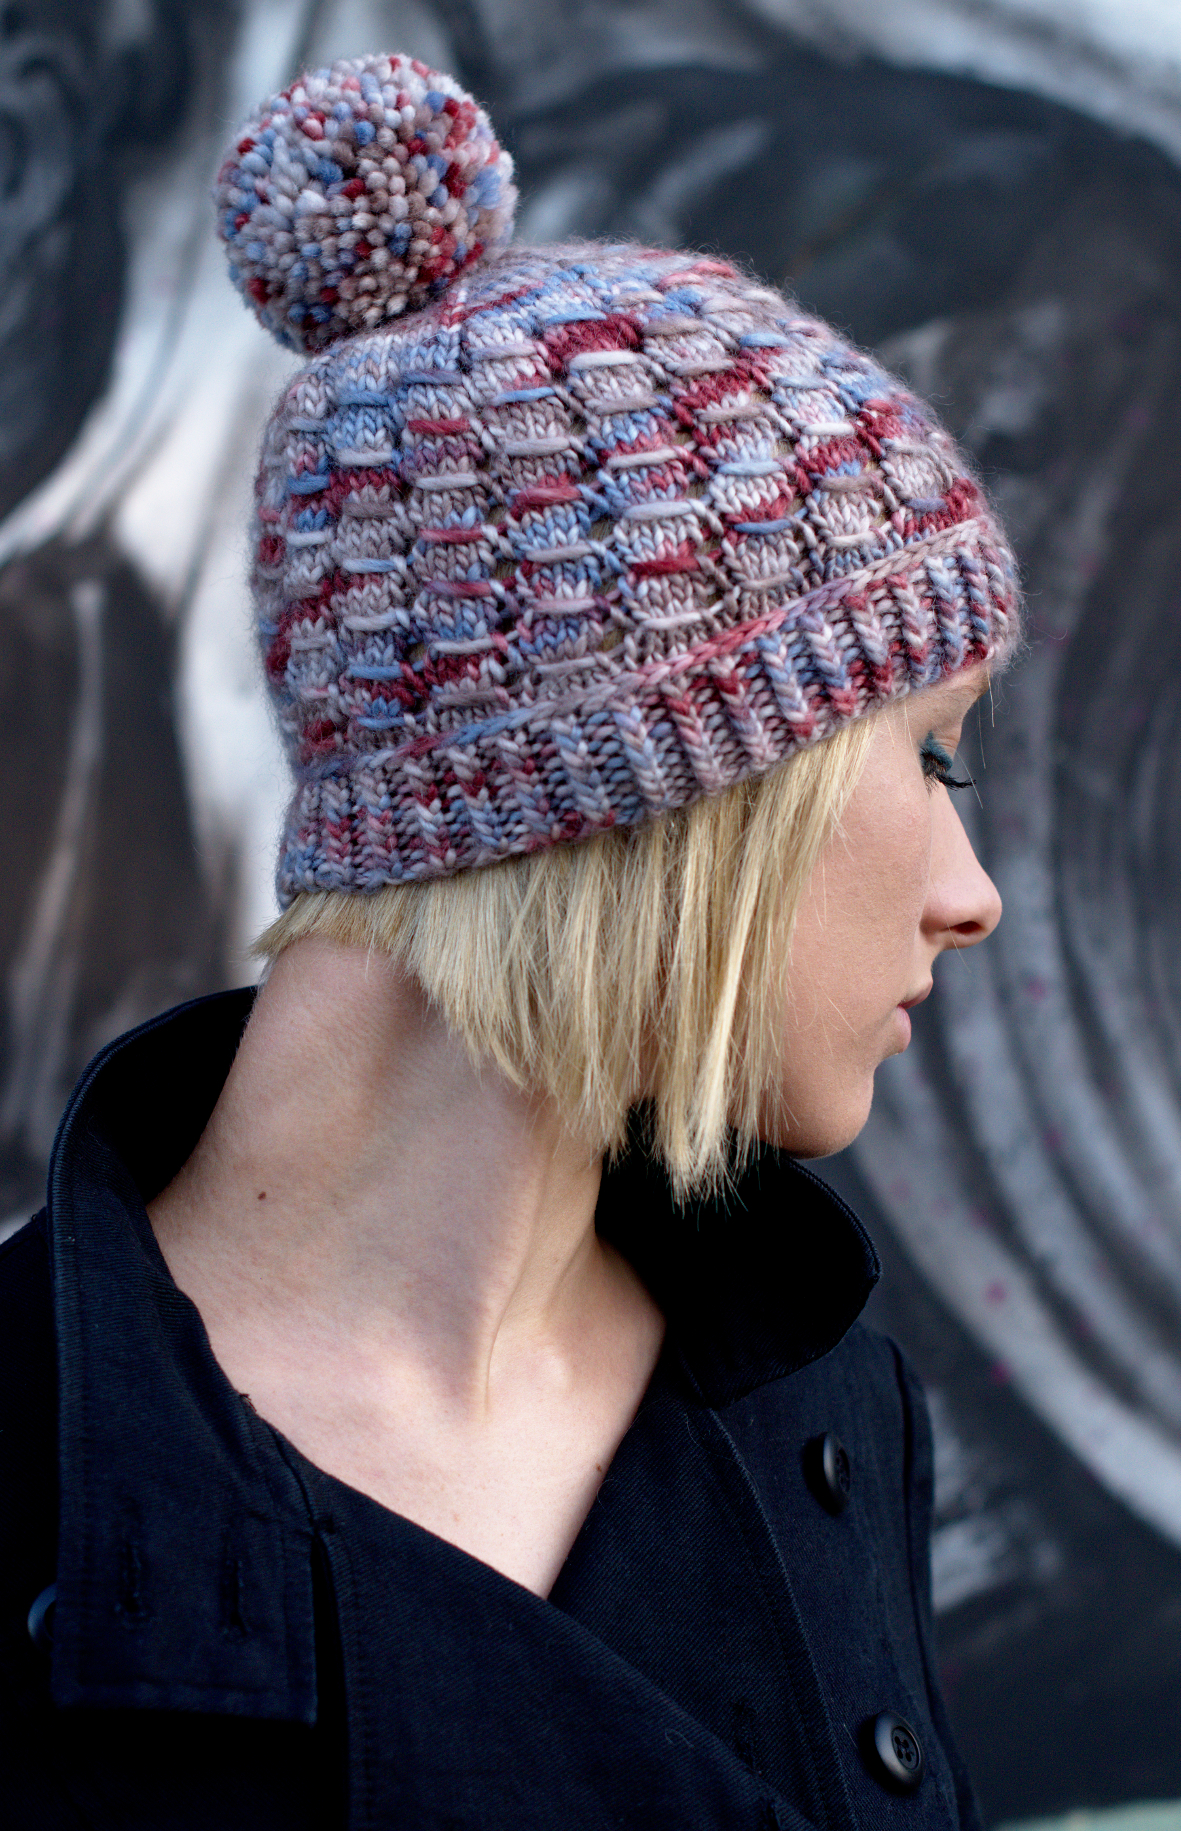 Laccio hand knit beanie hat pattern for aran weight yarn